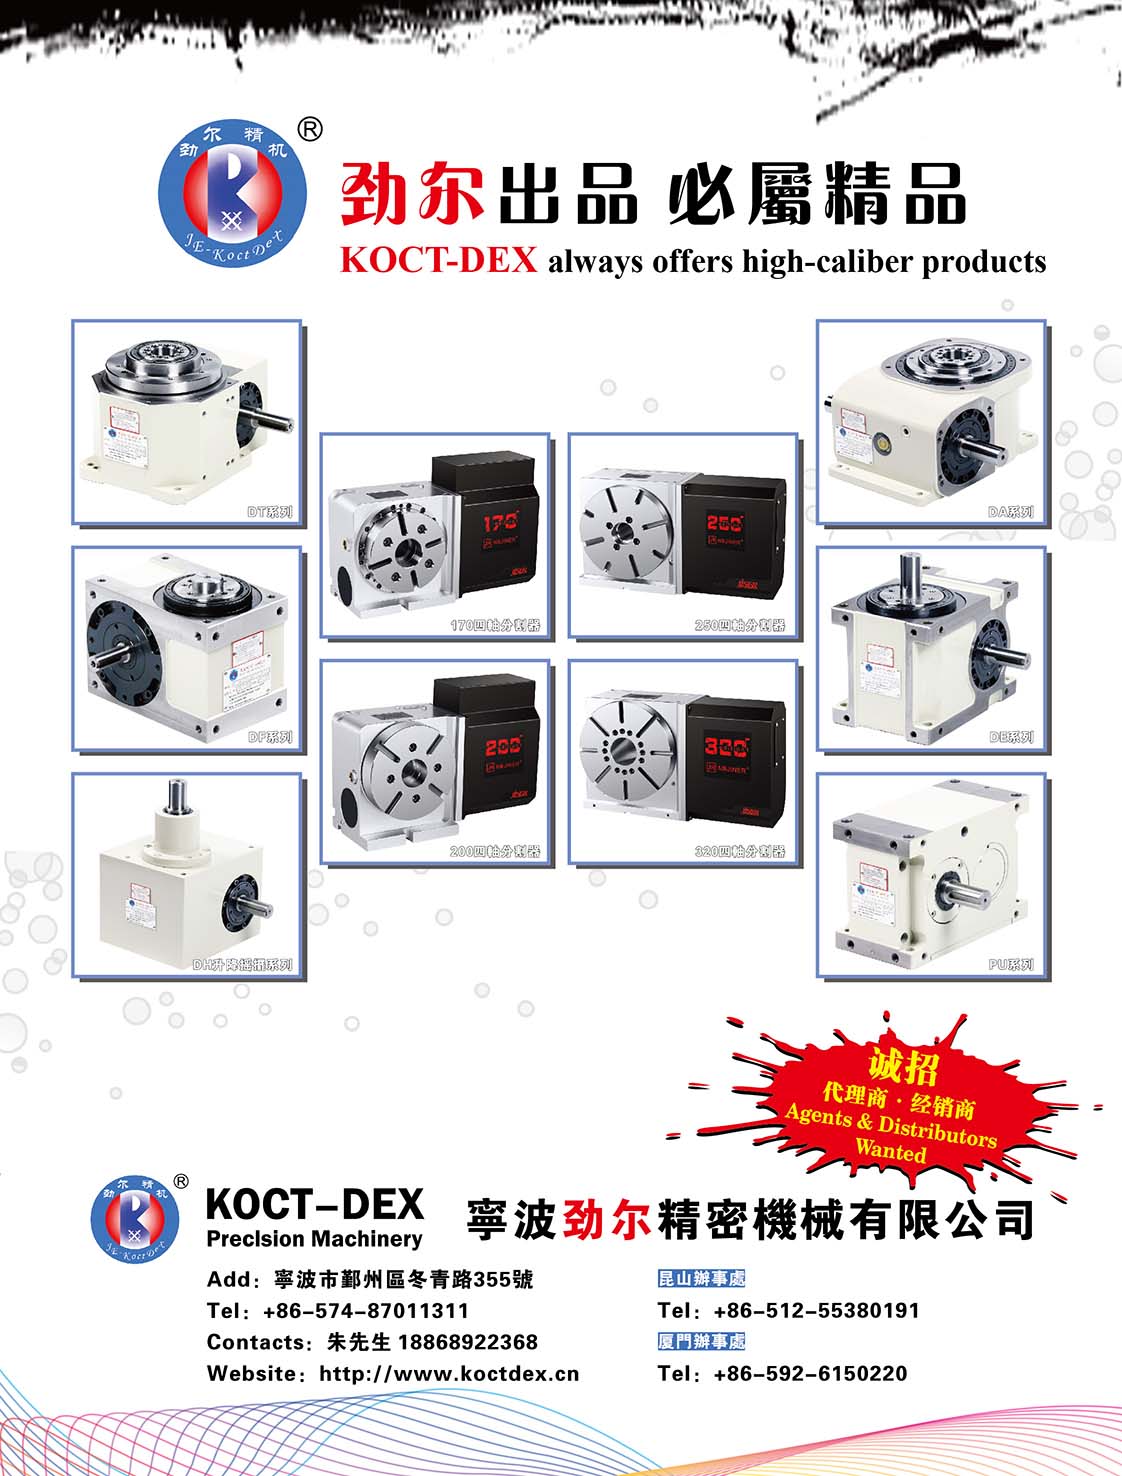 KOCT-DEX PRECISION MACHINERY CO., LTD.